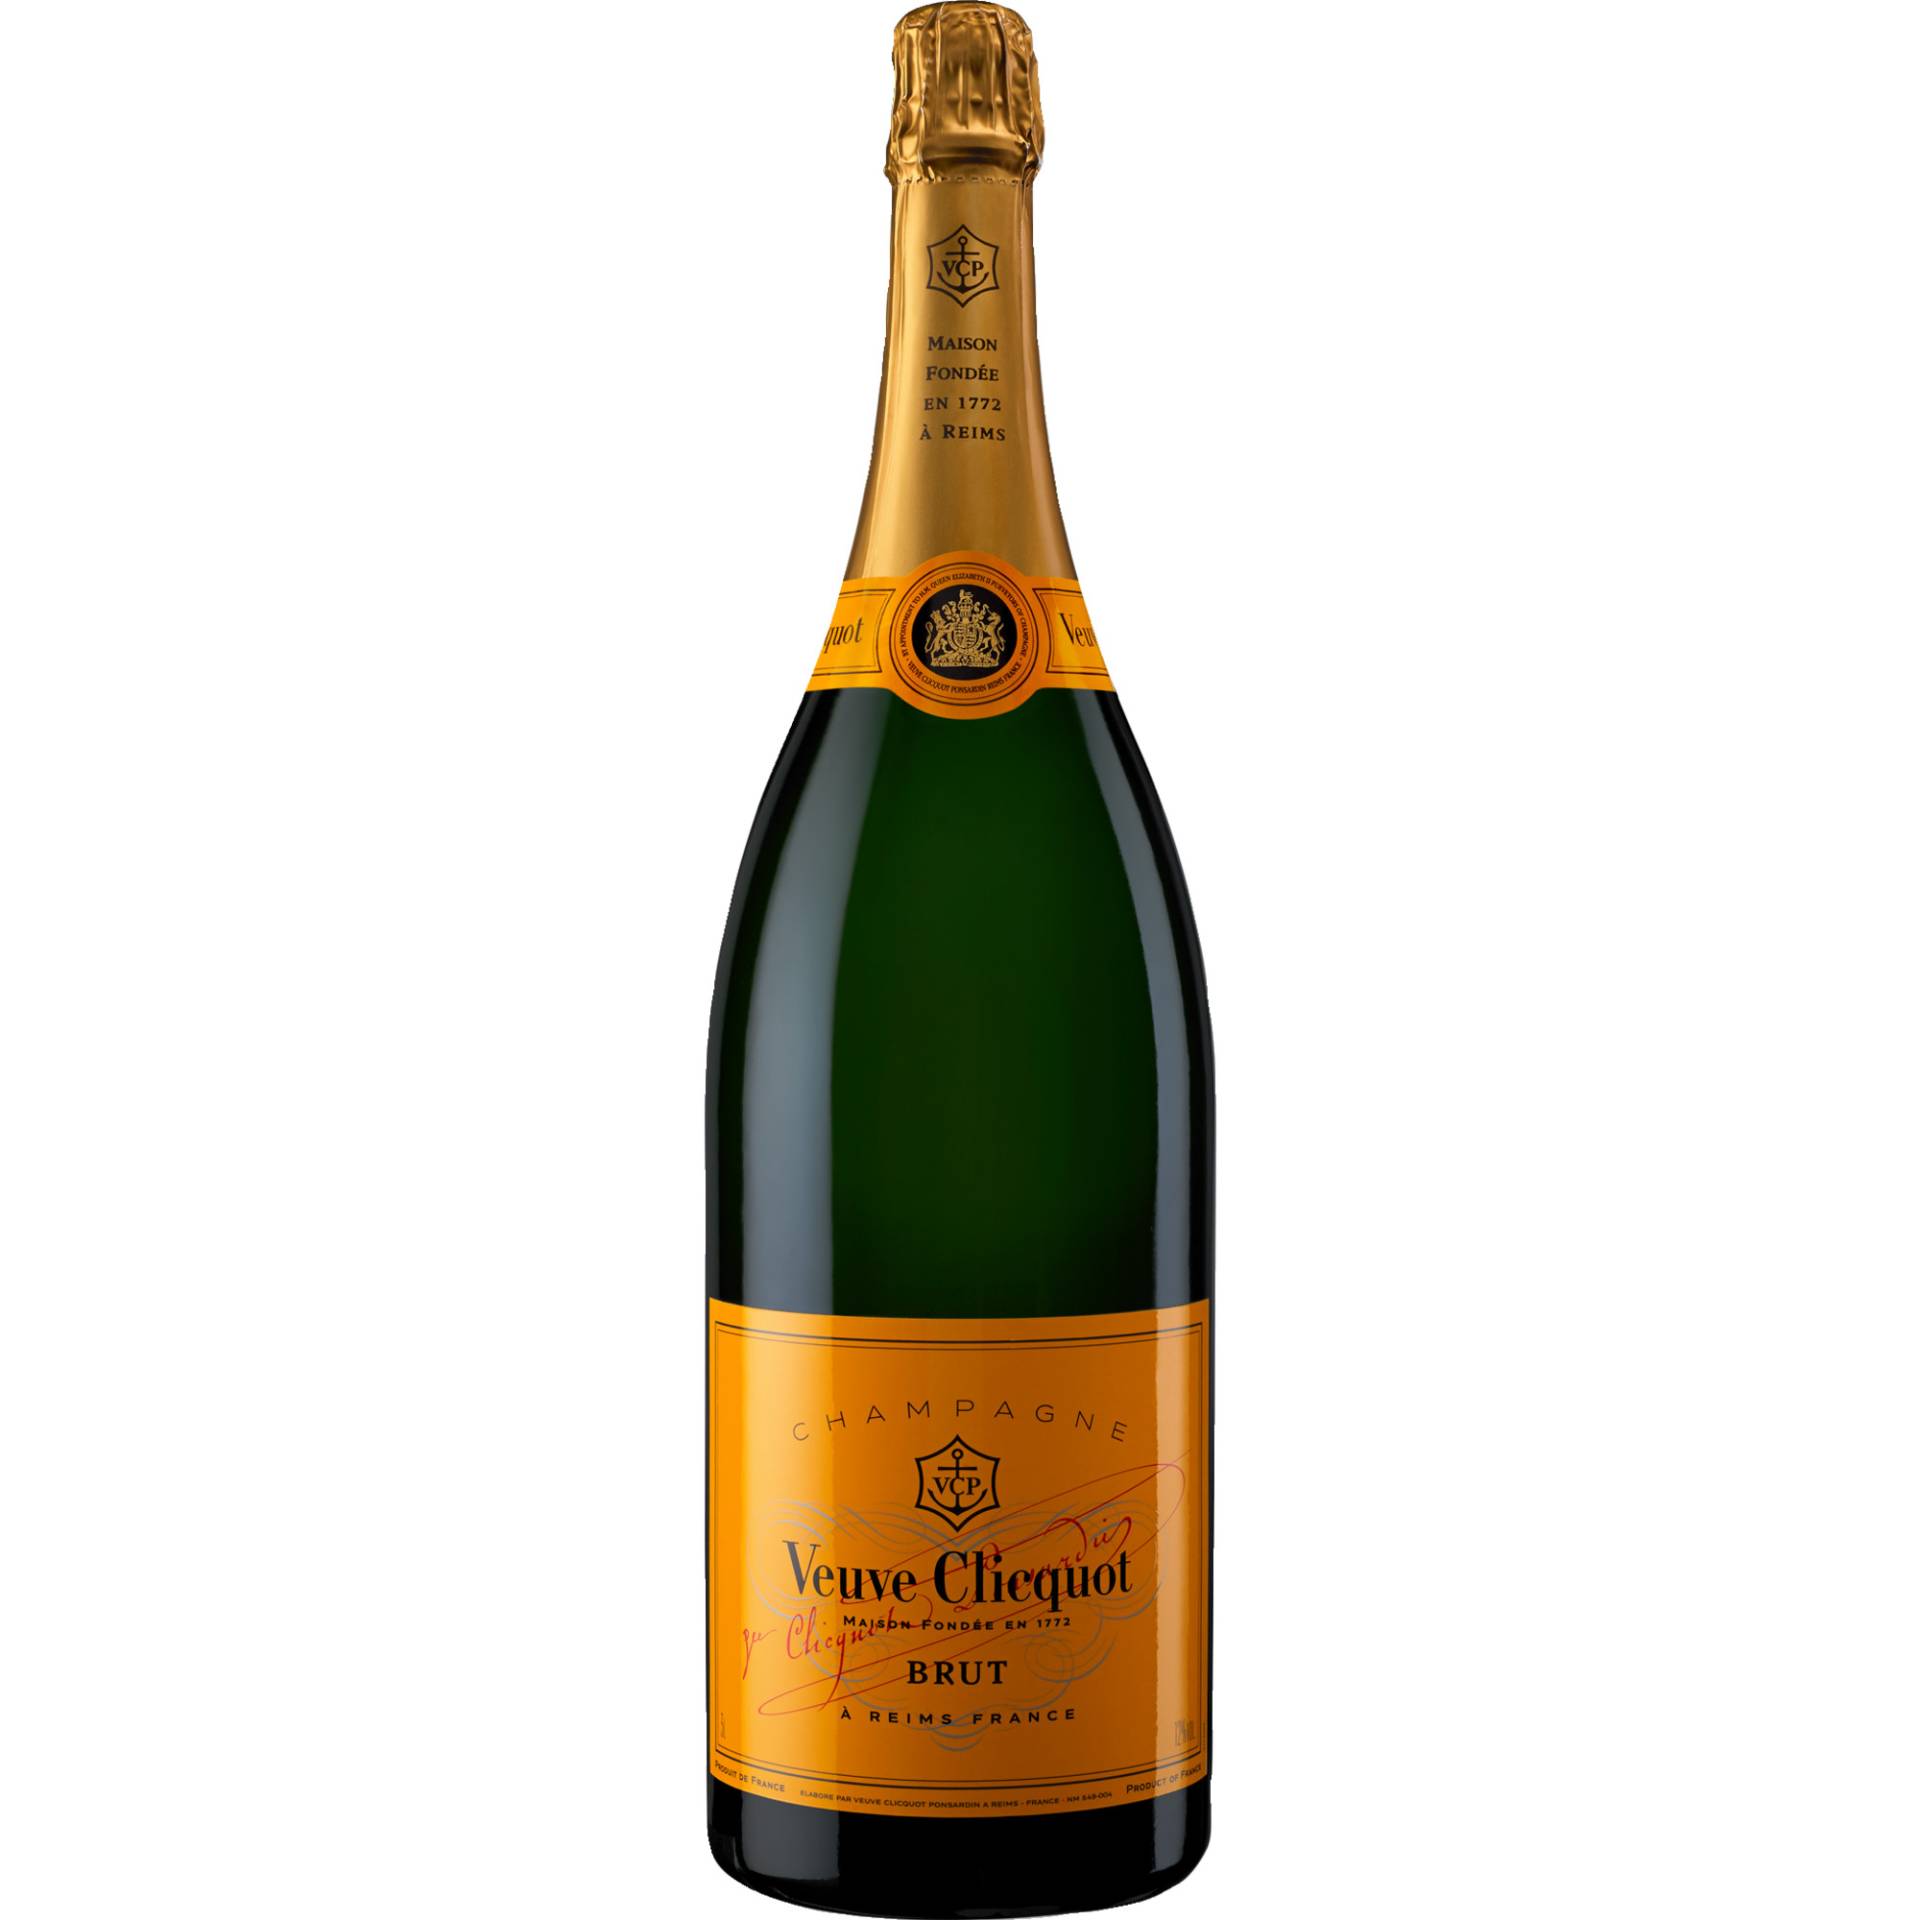 Champagne Veuve Clicquot Ponsardin, Brut, Champagne AC, Jeroboam, Einzelholzkiste, Champagne, Schaumwein von Veuve Clicquot Ponsardin, Reims, France